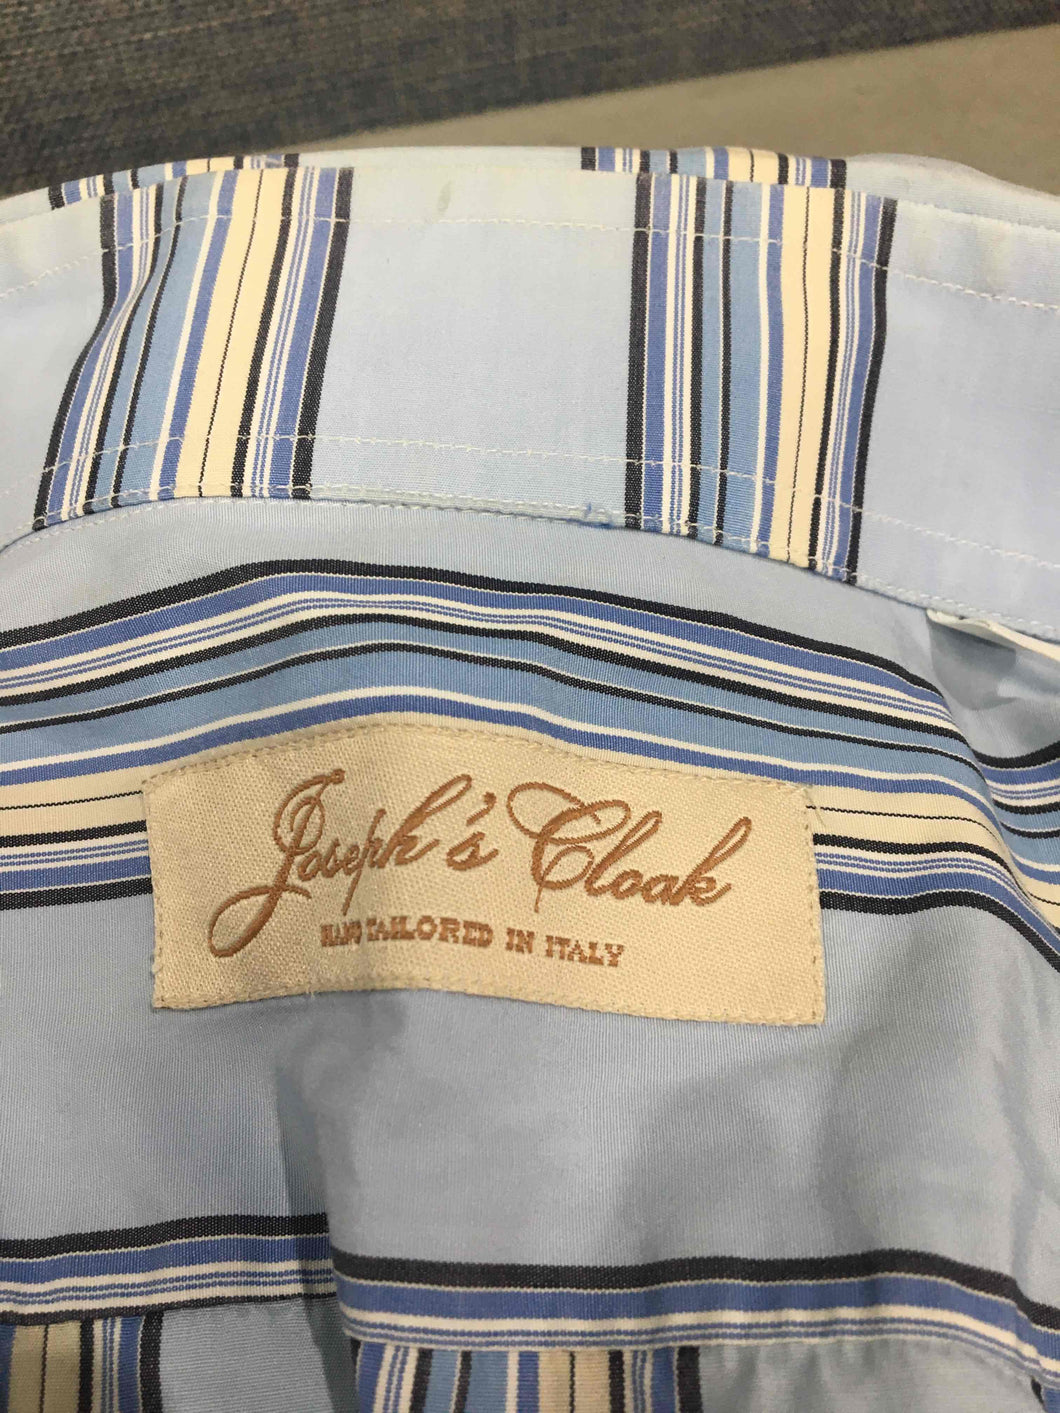 Josephs Cloak Blue Stripes Long Sleeve Shirt Size 44